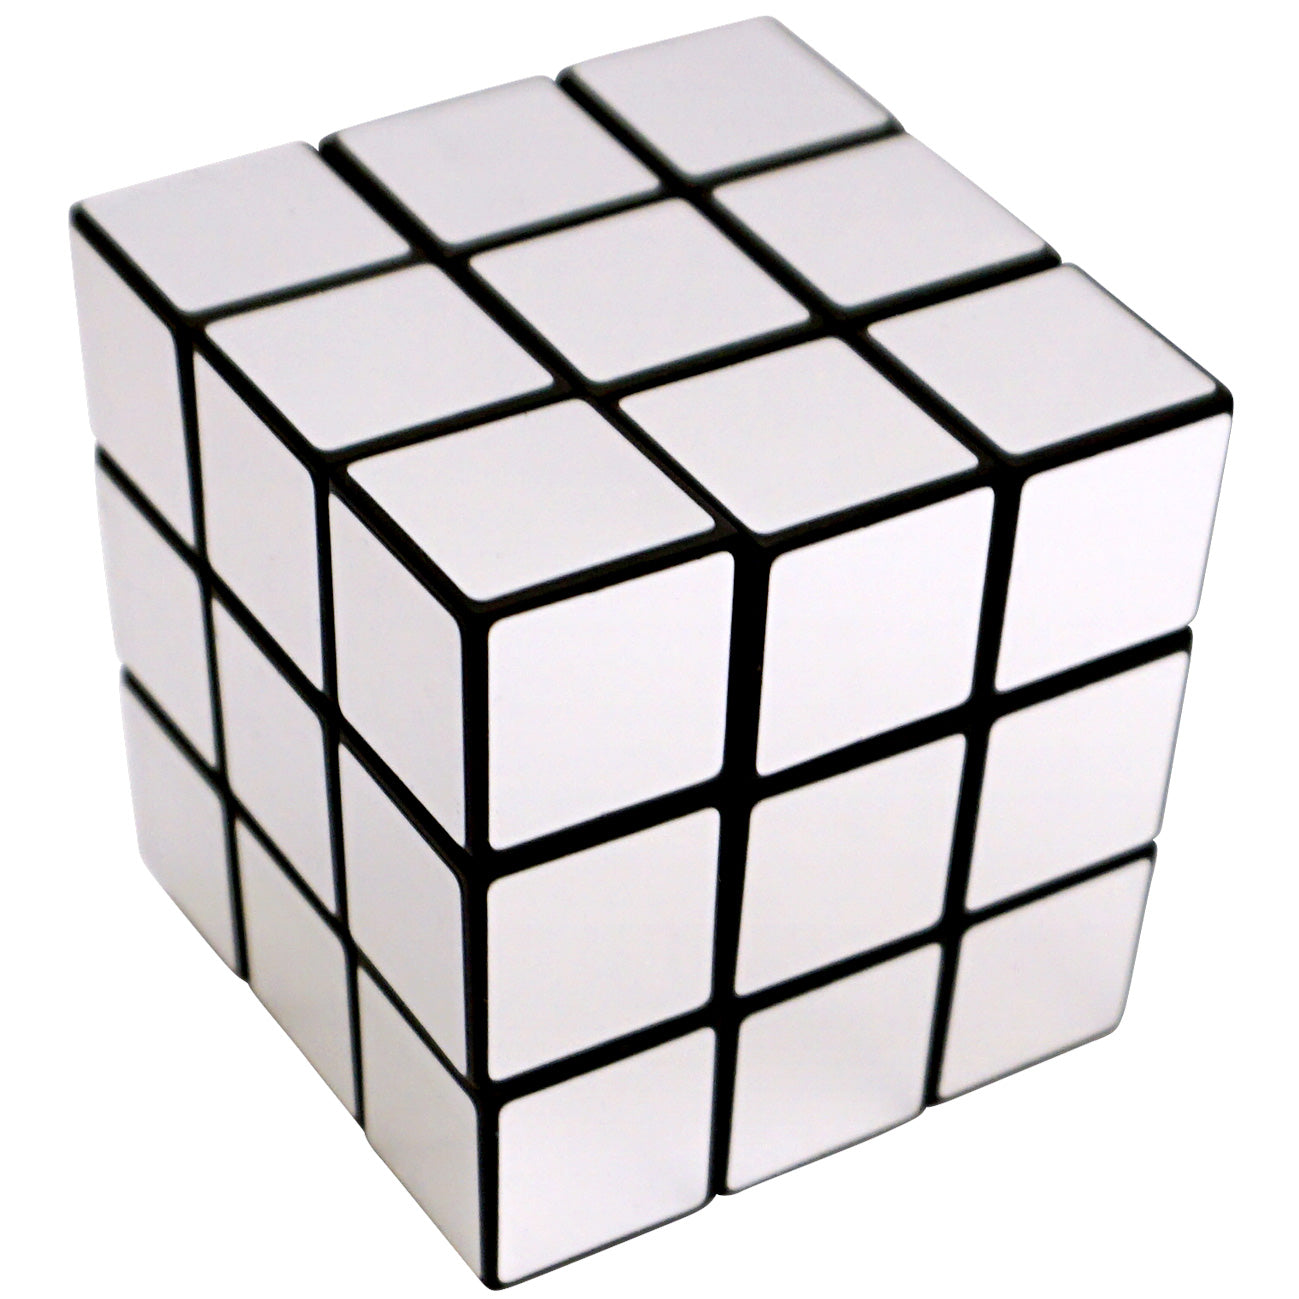 Idiot's Cube Puzzle Display